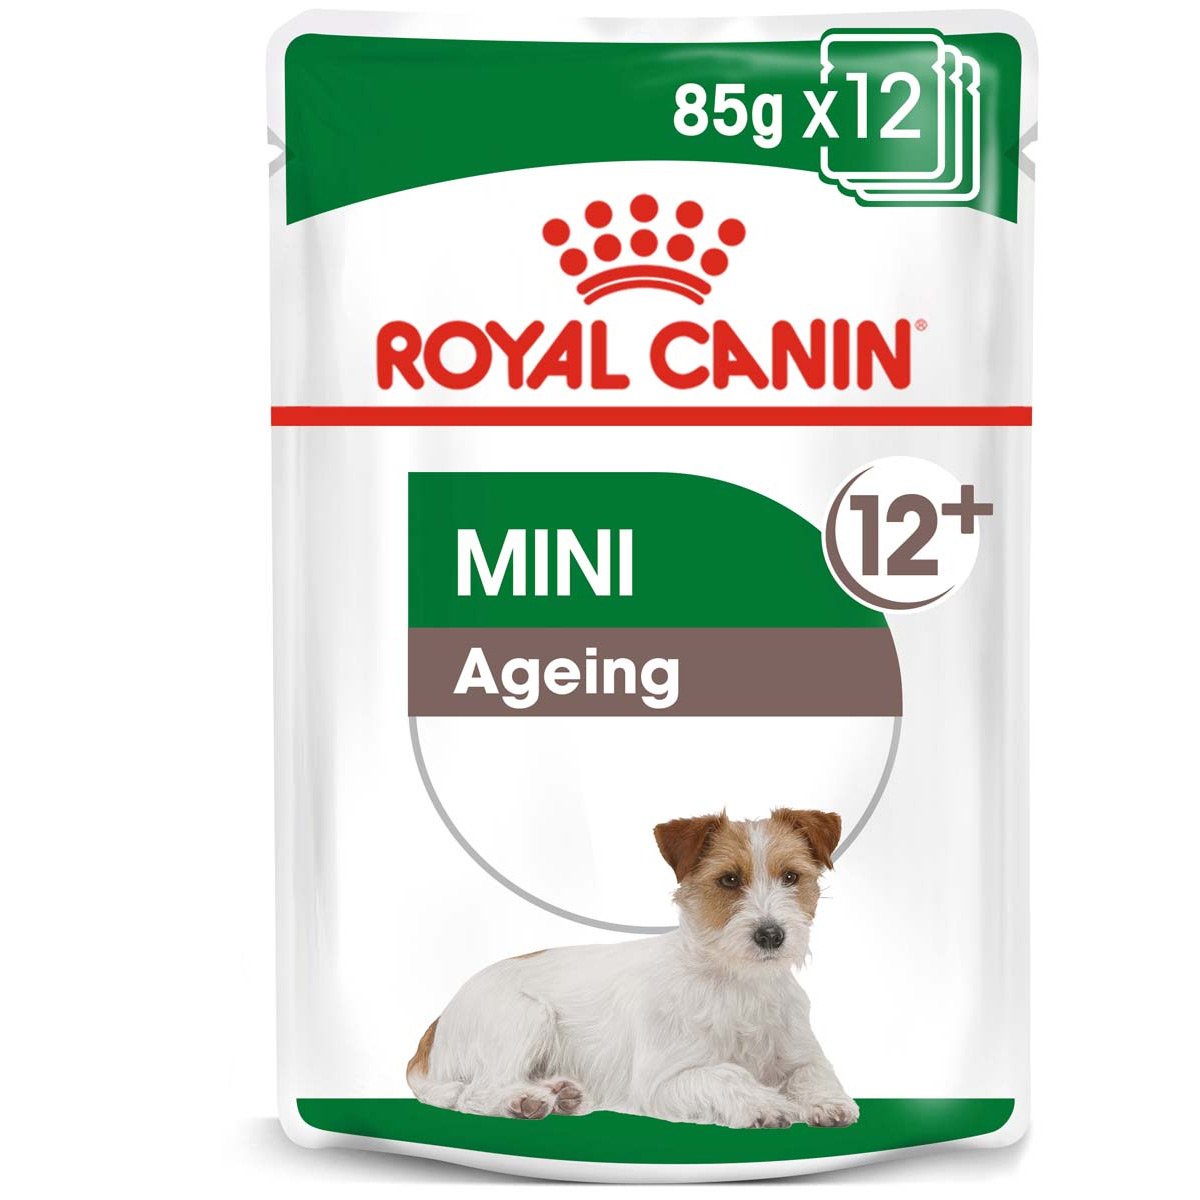 ROYAL CANIN MINI AGEING 12+ Nassfutter für ältere kleine Hunde 12x85g von Royal Canin